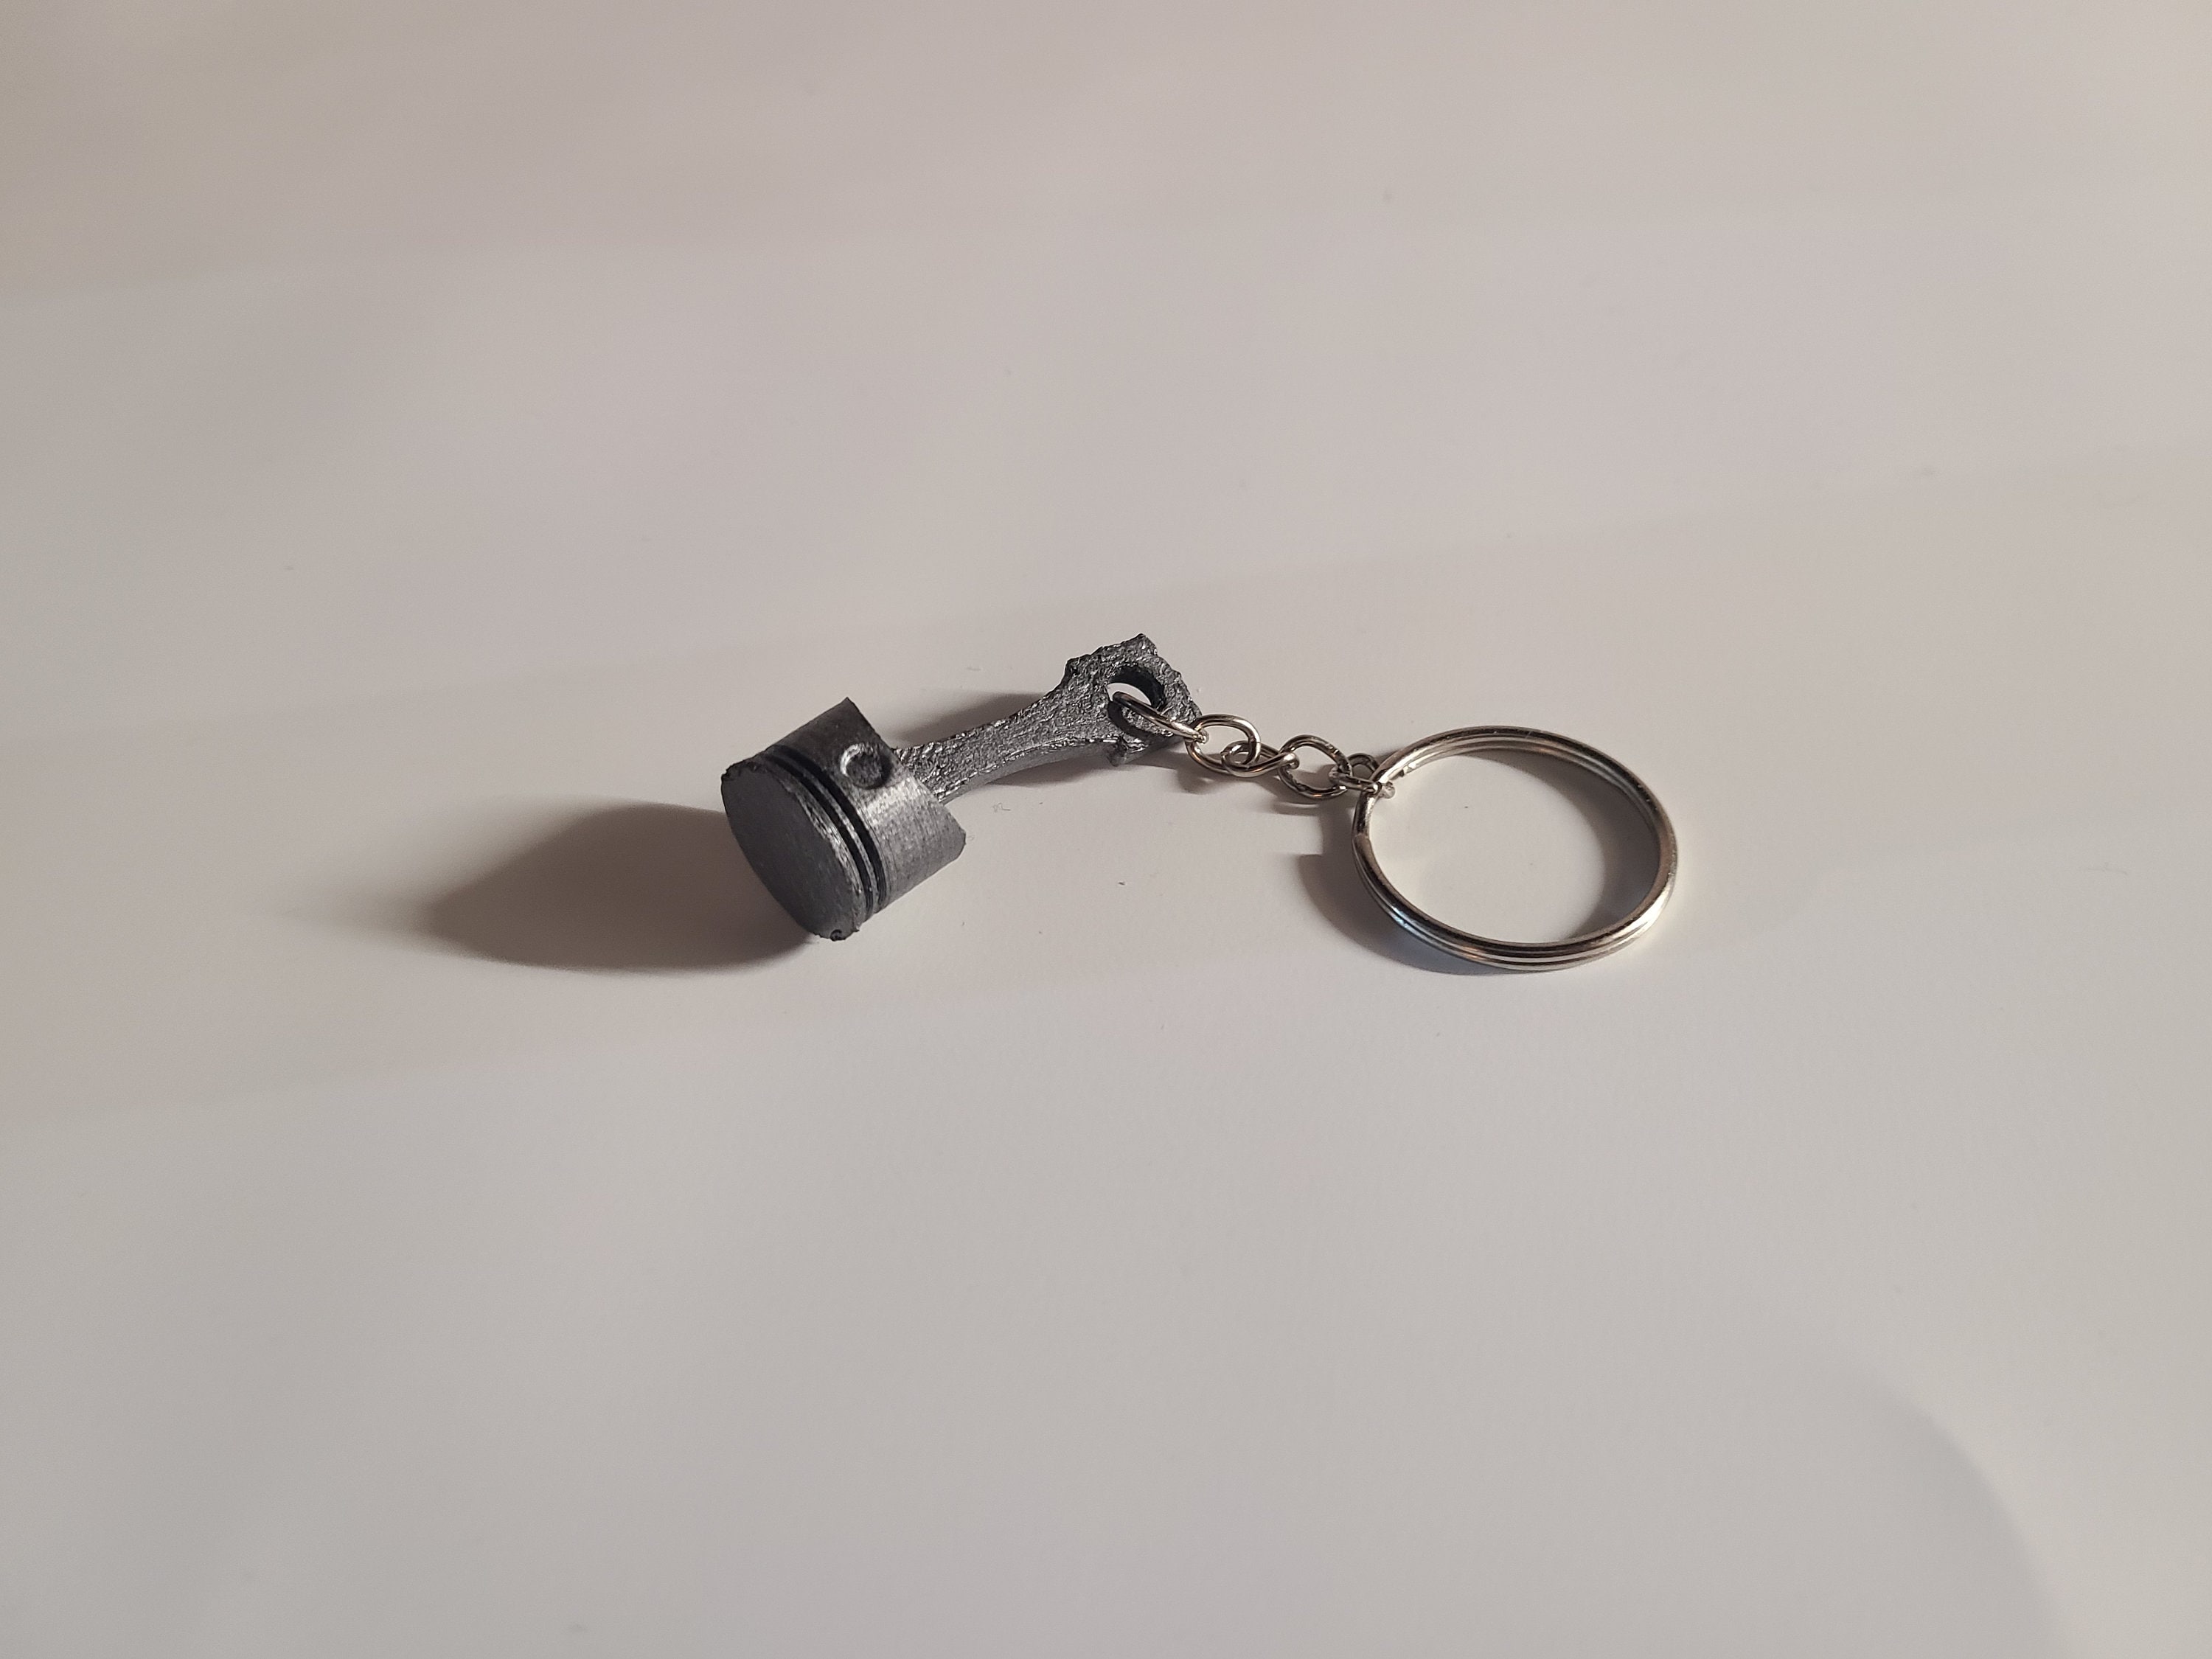 LIUL Piston Art Keychain, Keychain Made from Motorcycle Piston, Skeleton  Engine Model Keyring, Alloy Key Chain Ring, Mini Pendant, Flashlight &  Bottle